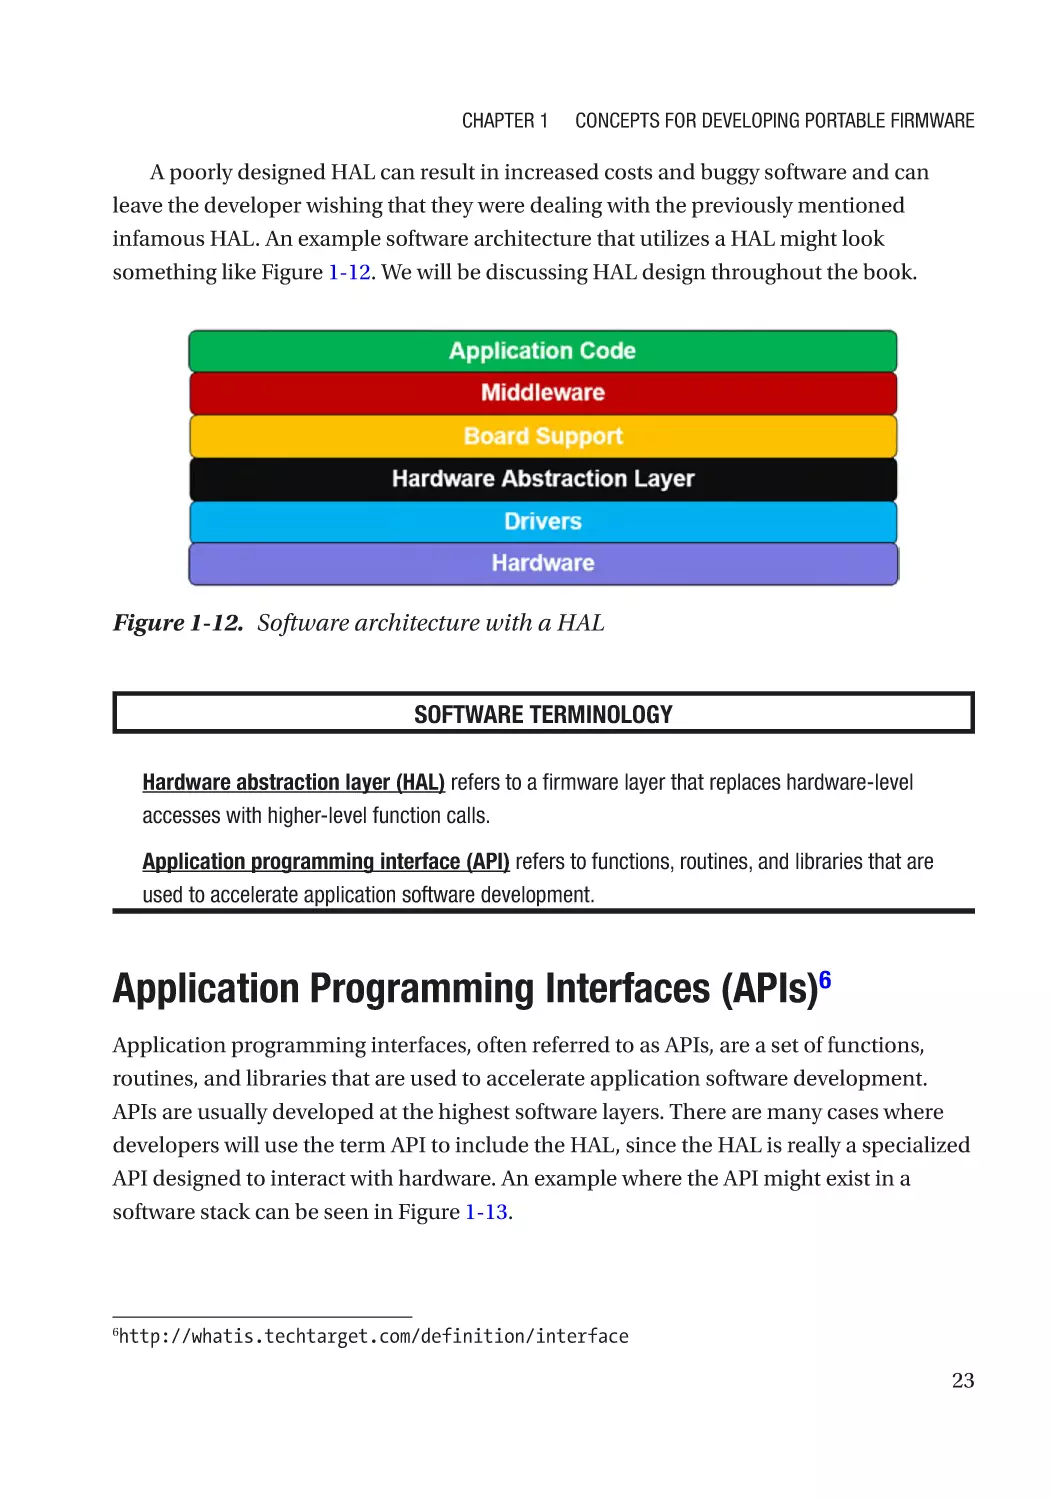 Application Programming Interfaces (APIs)6